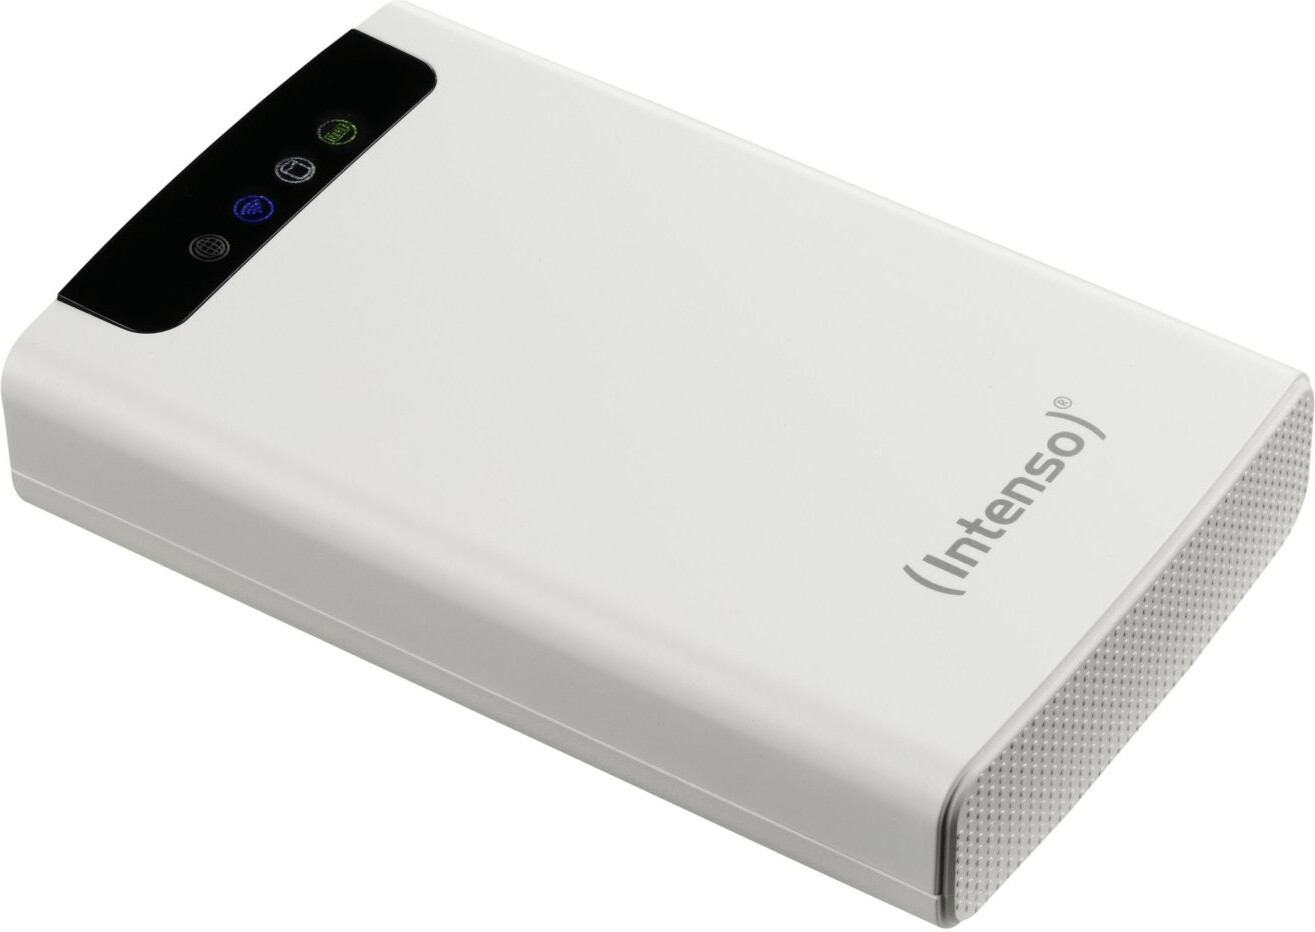 Intenso Memory 2 Move USB 3.0 500GB white